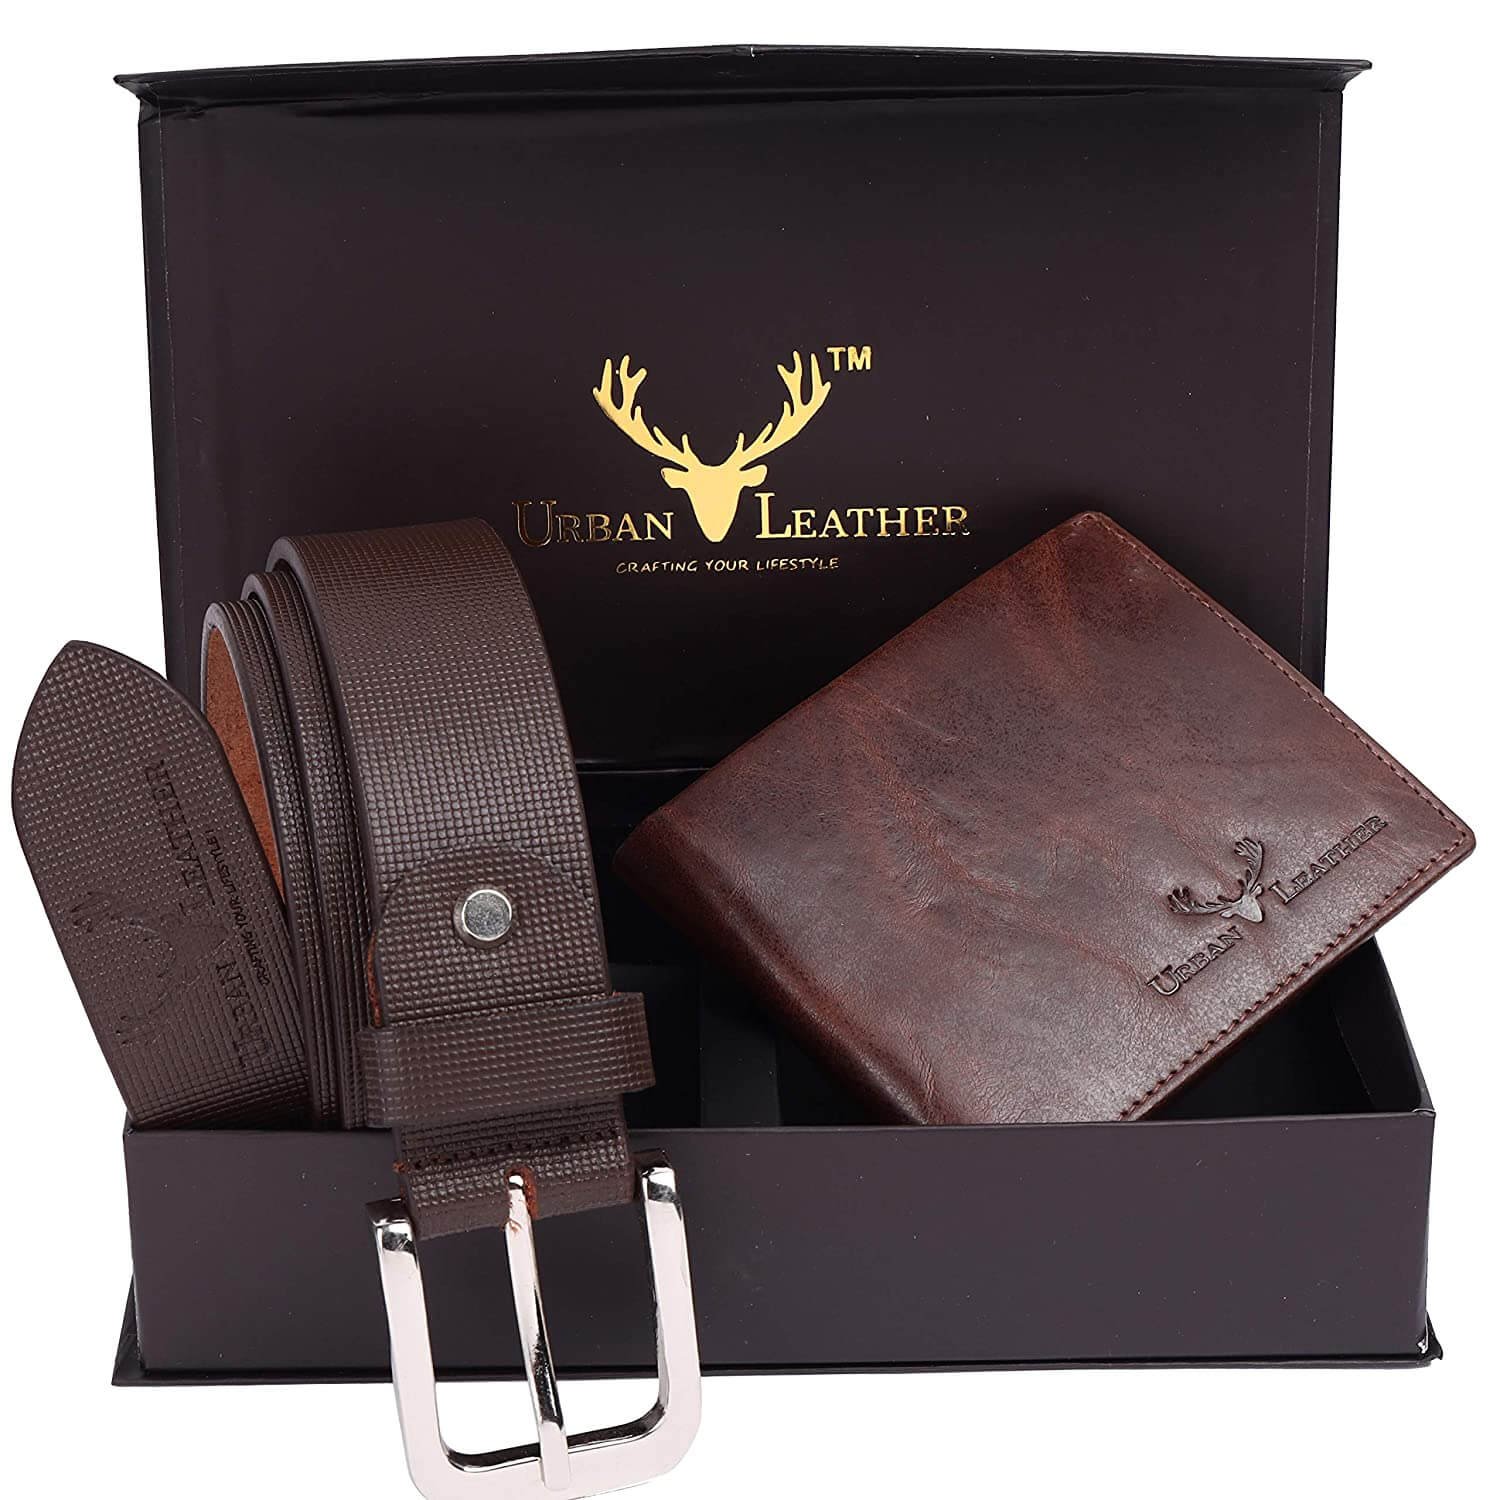 Urban Leather Gift Hamper for Men